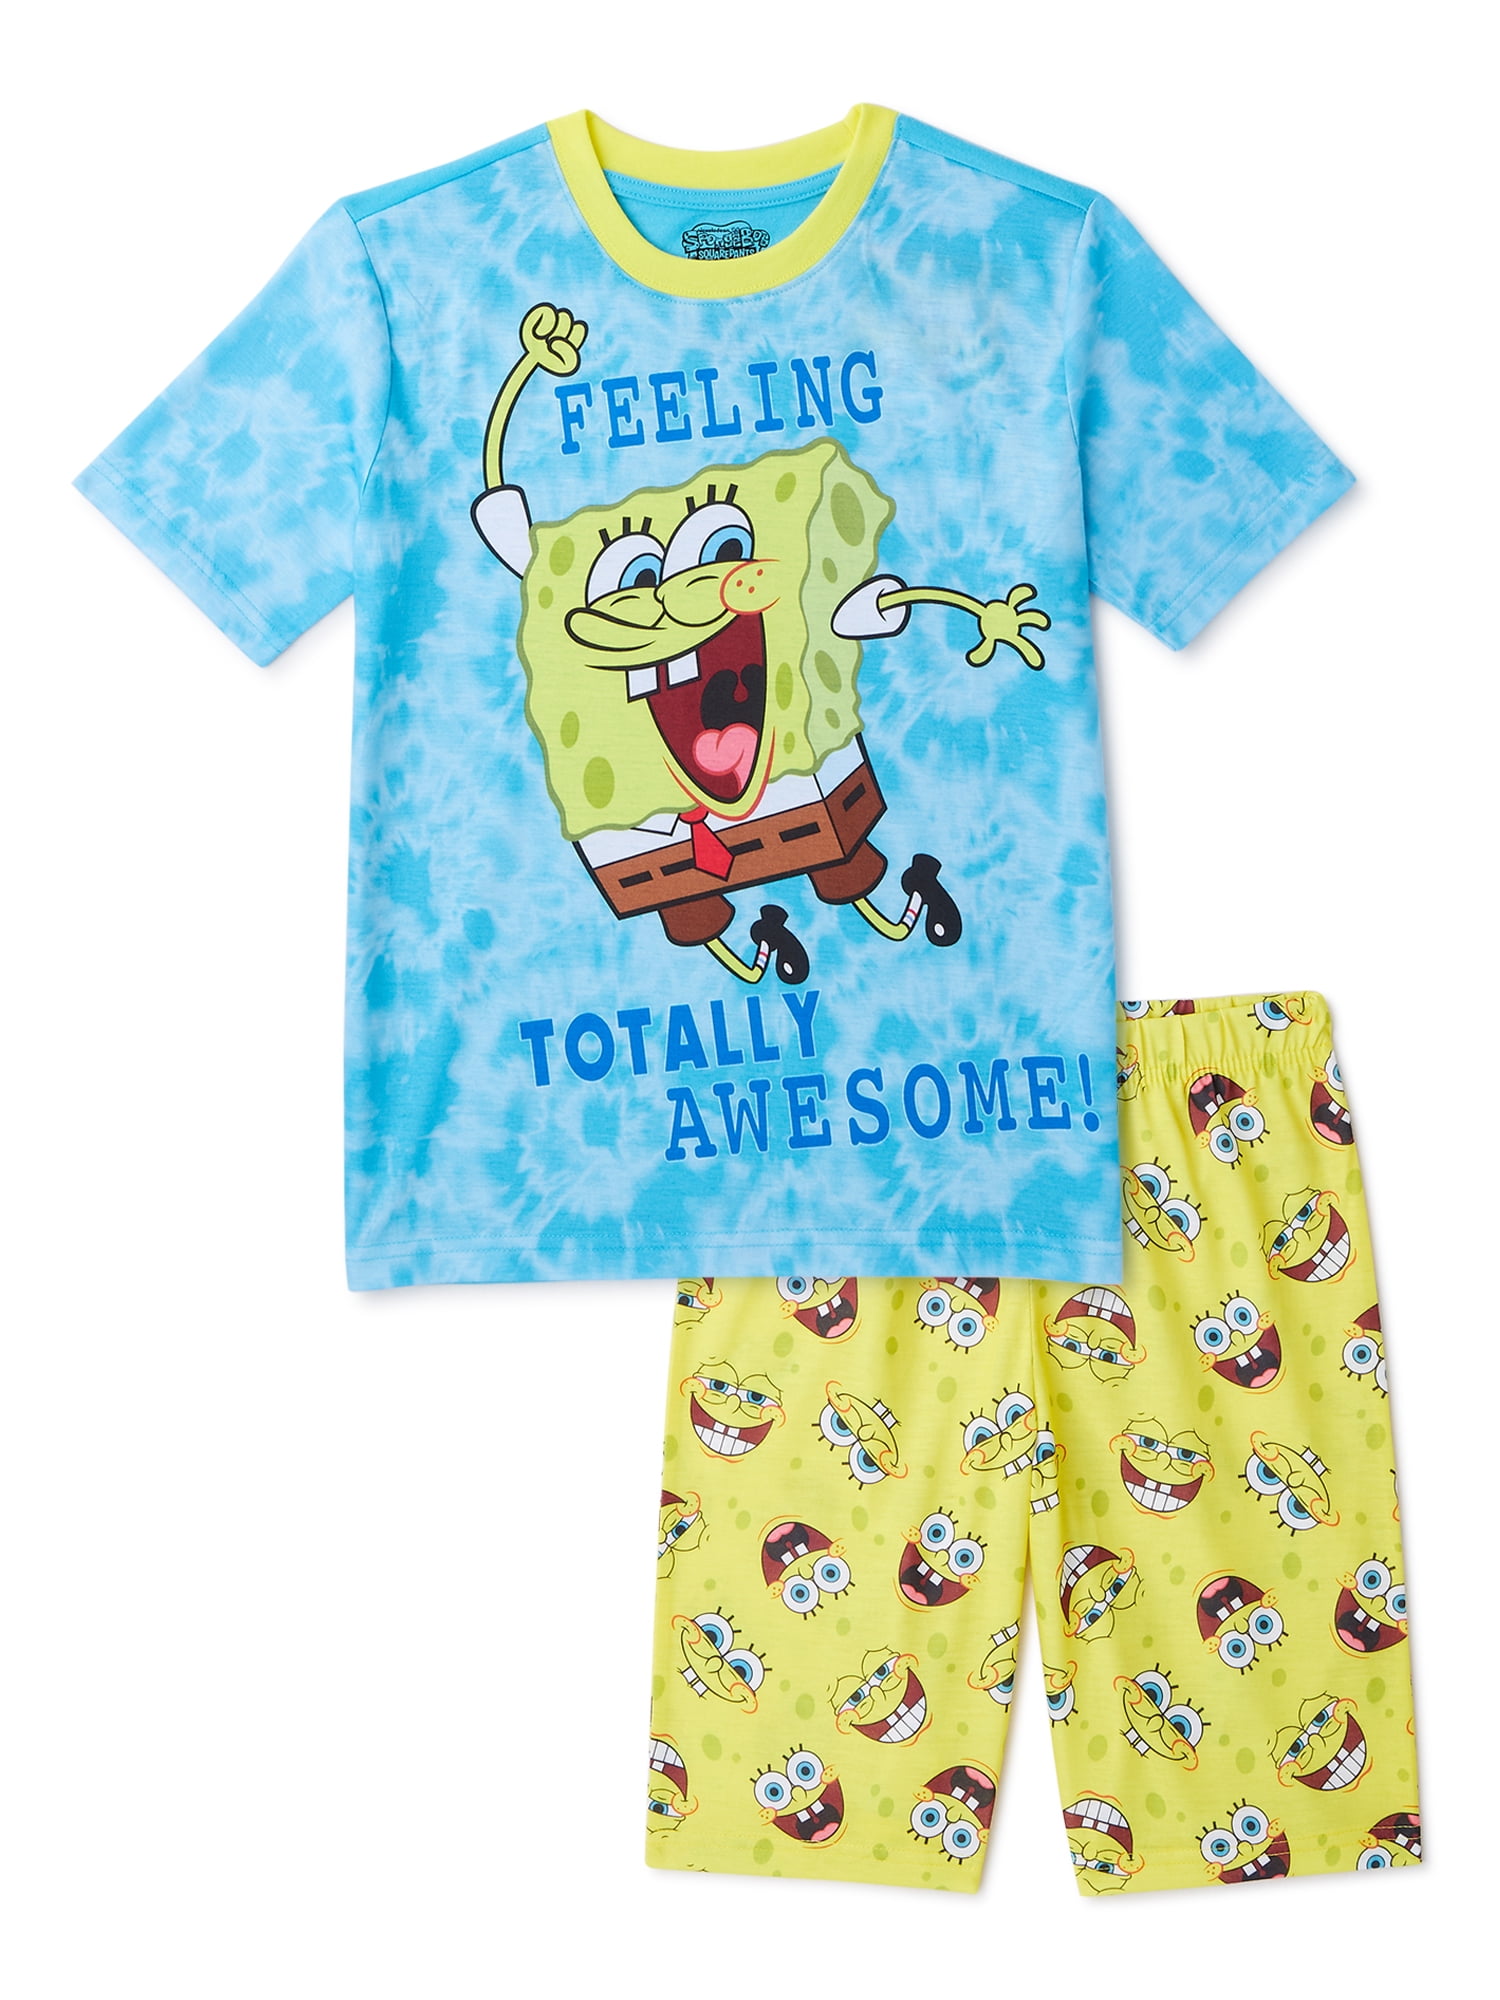 Size 3T to 8 SpongeBob SquarePants Boy's Pajama Set,2 Piece PJ Set with Short Sleeve Top with Short Leg Bottoms,100% Cotton